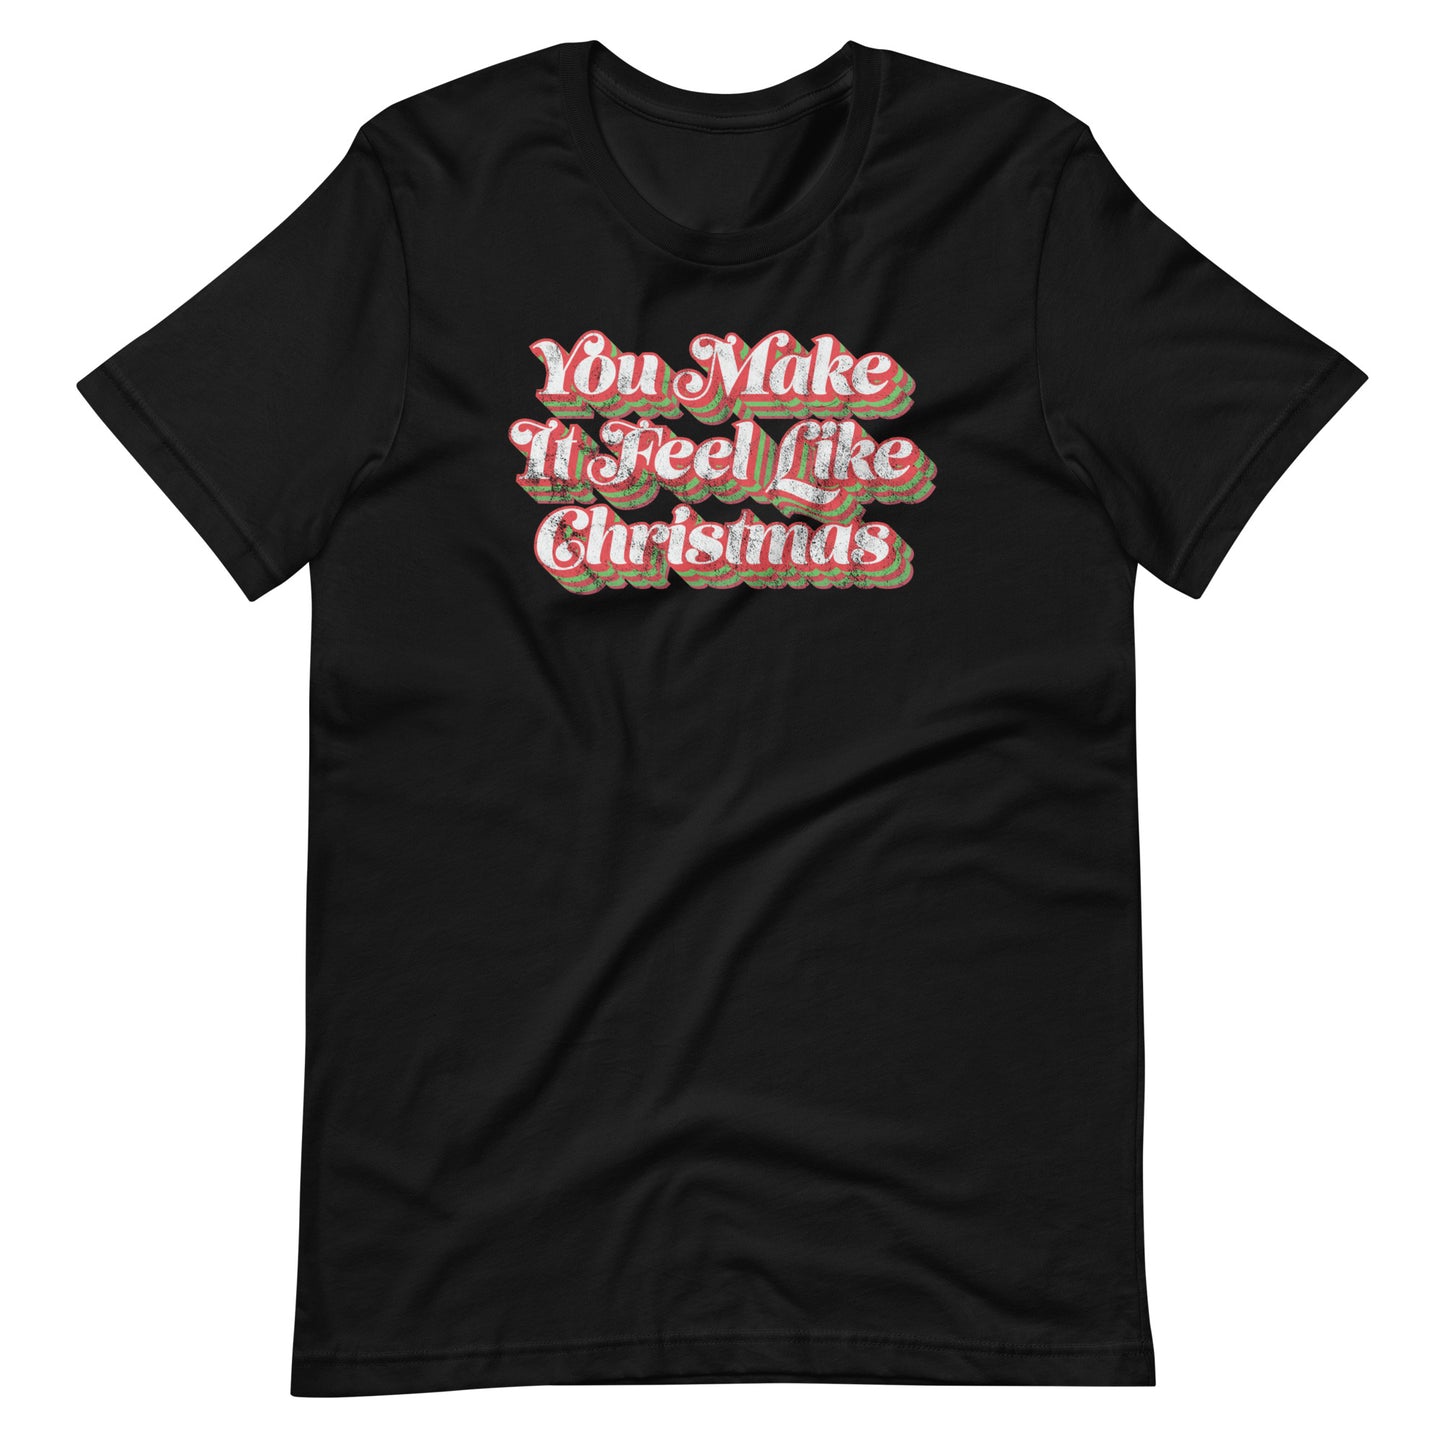 You Make It Feel Like Christmas t-shirt